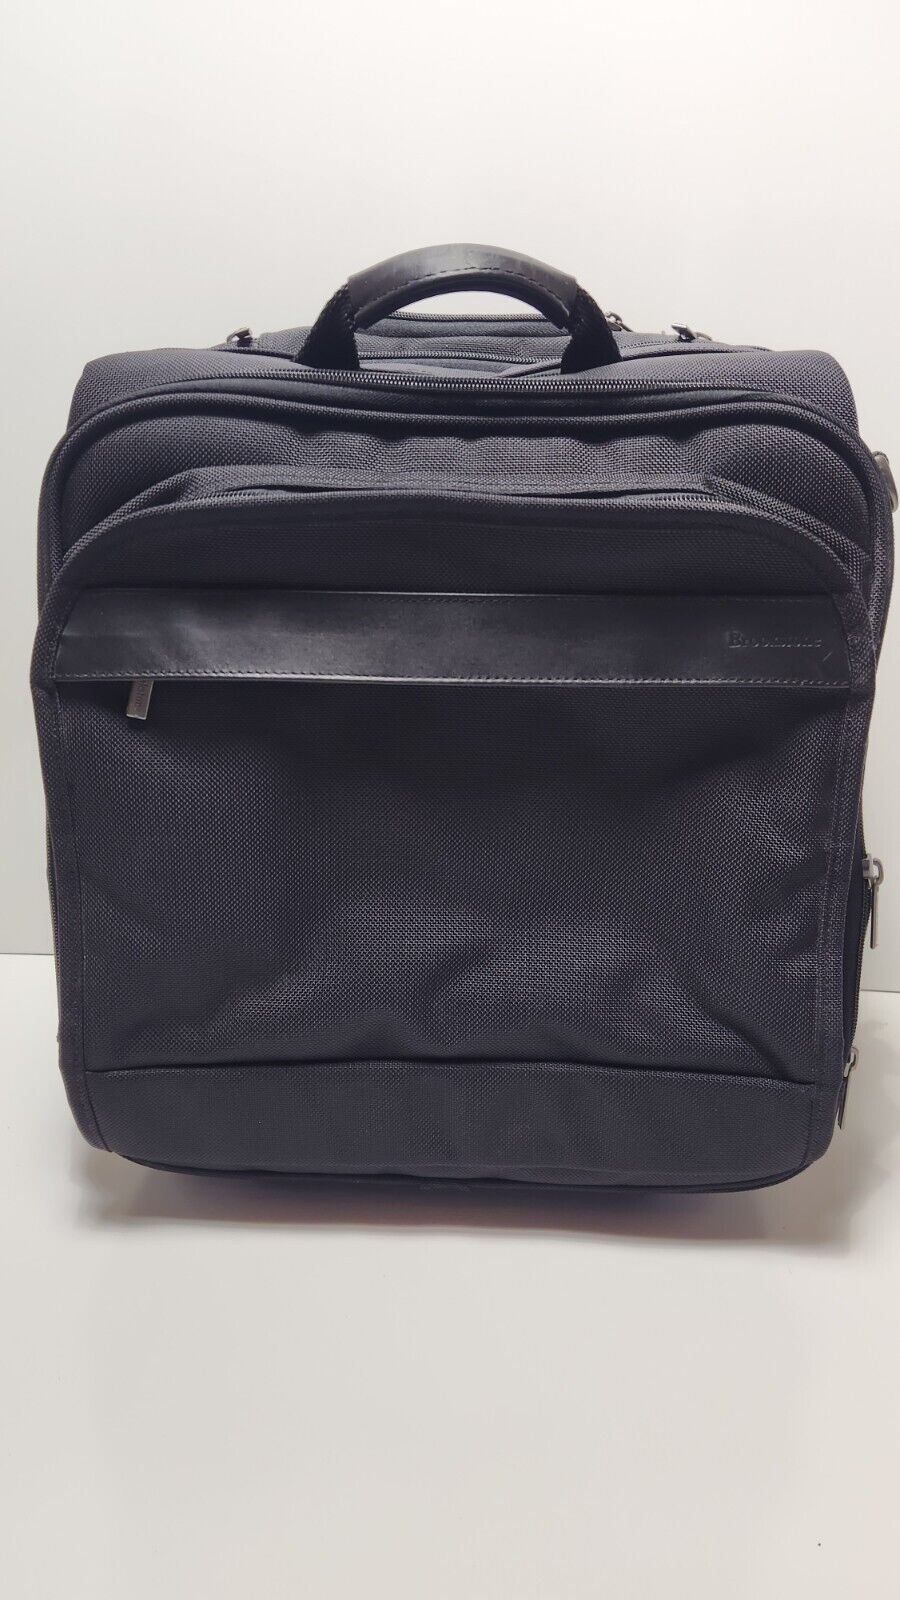 Brookstone Black Laptop Briefcase  Luggage On Wheels